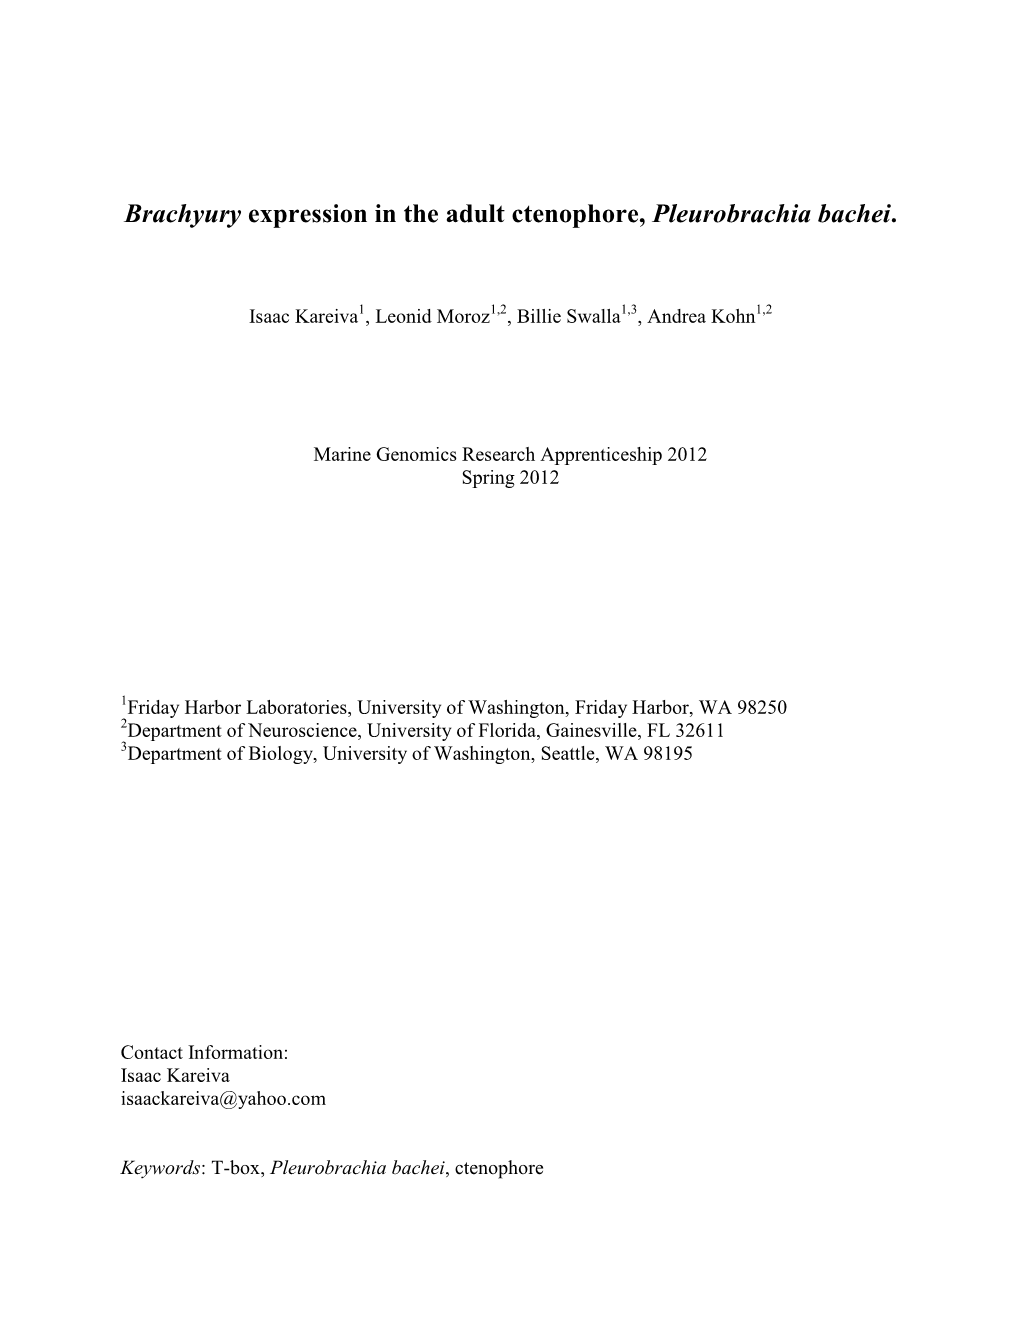 Brachyury Expression in the Adult Ctenophore, Pleurobrachia Bachei